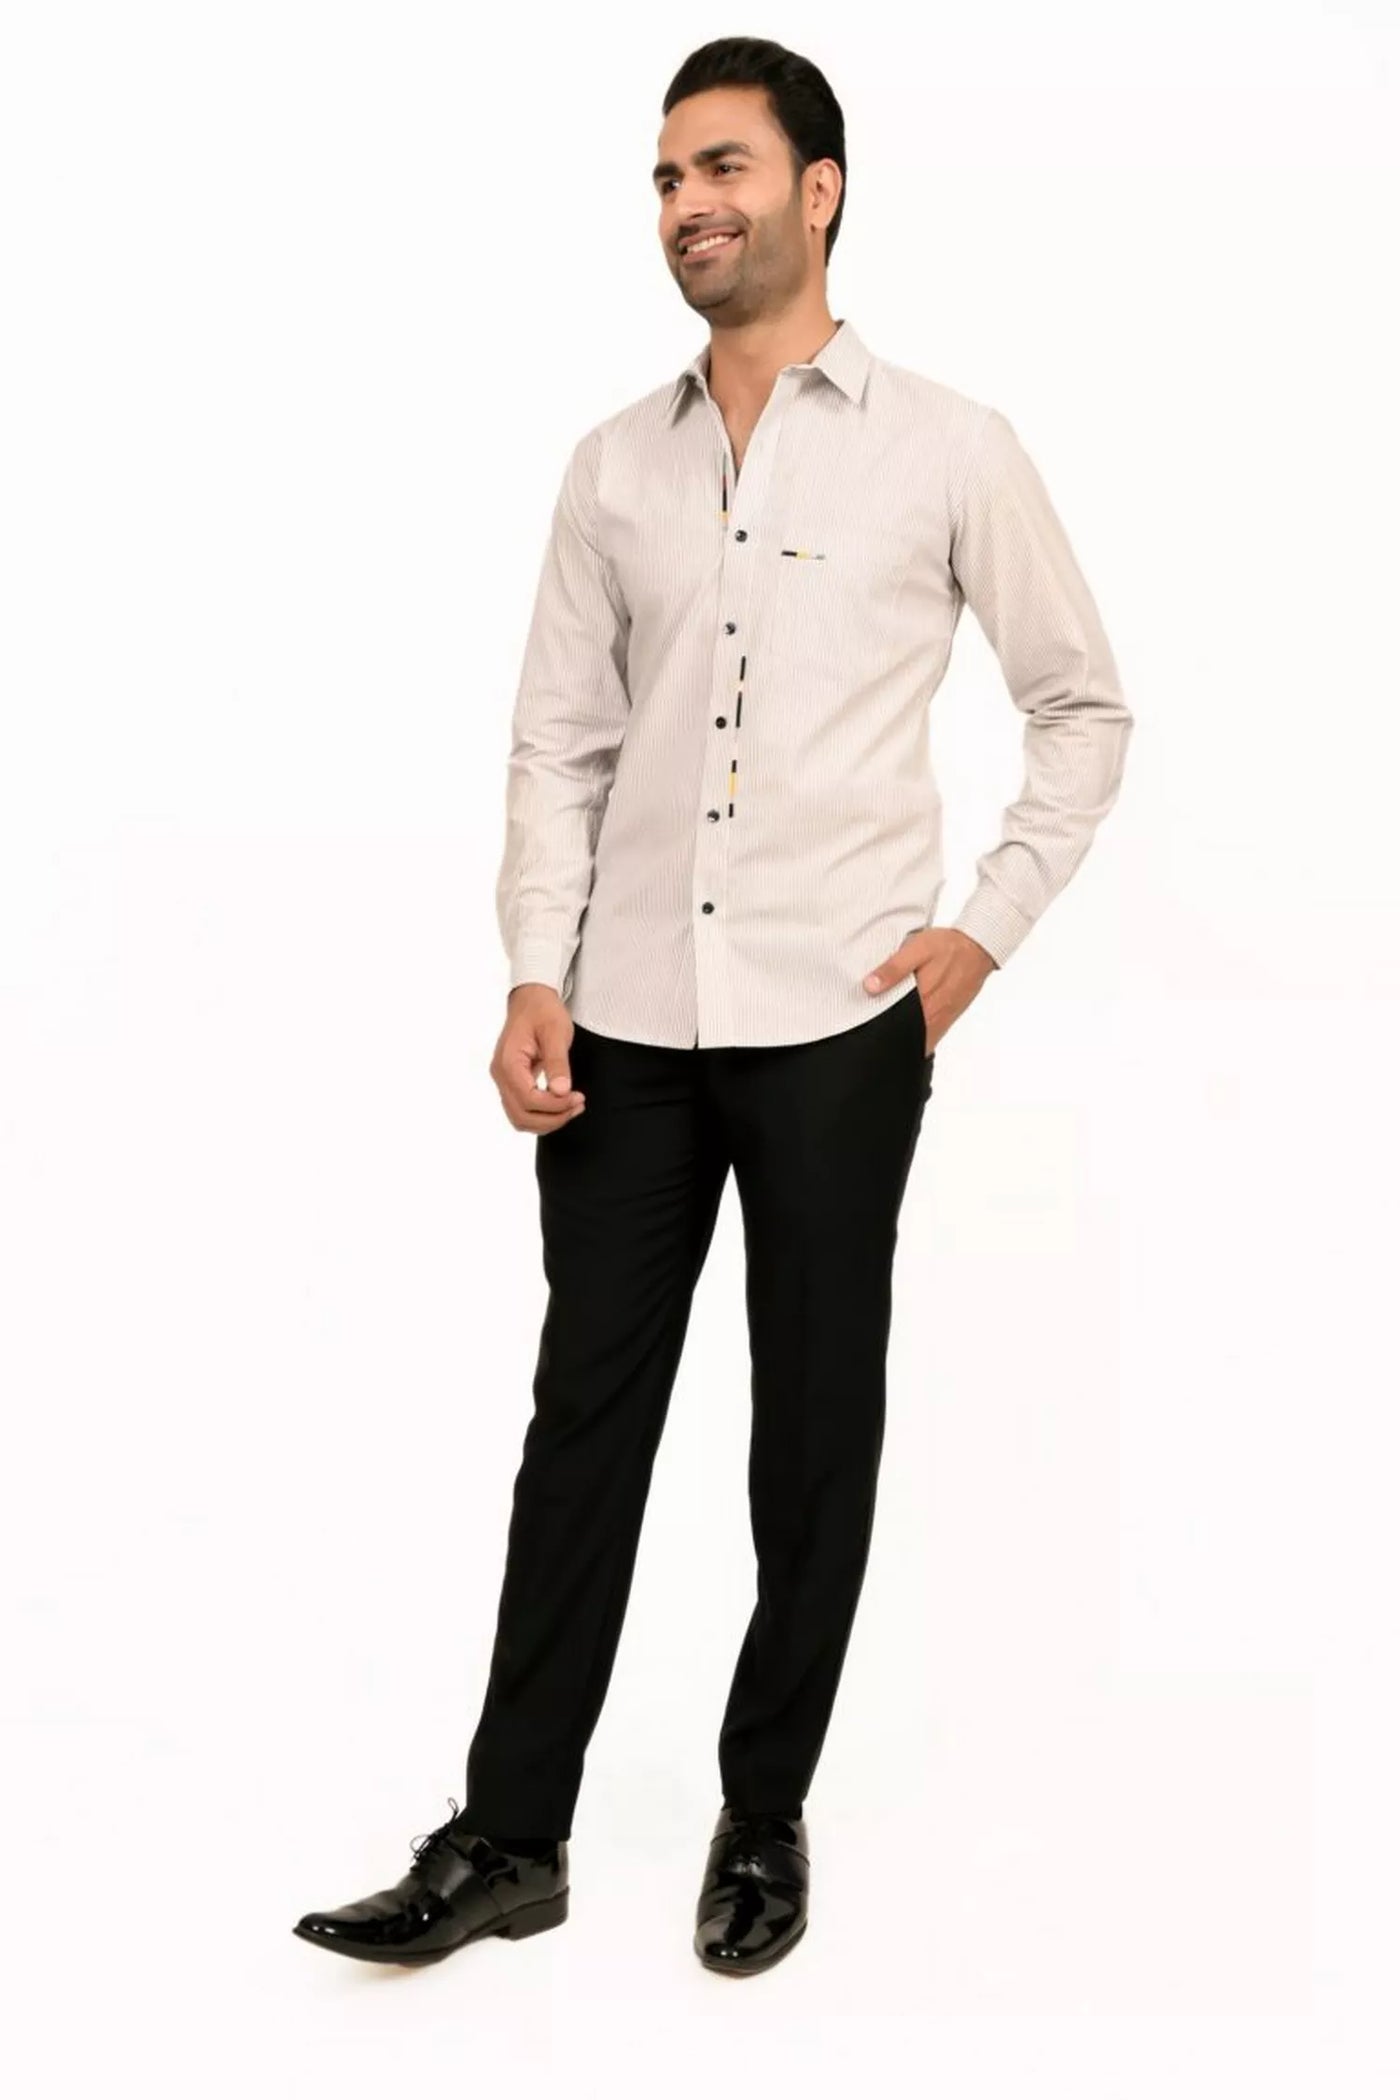 White And Black Striped Full Sleeves Shirt